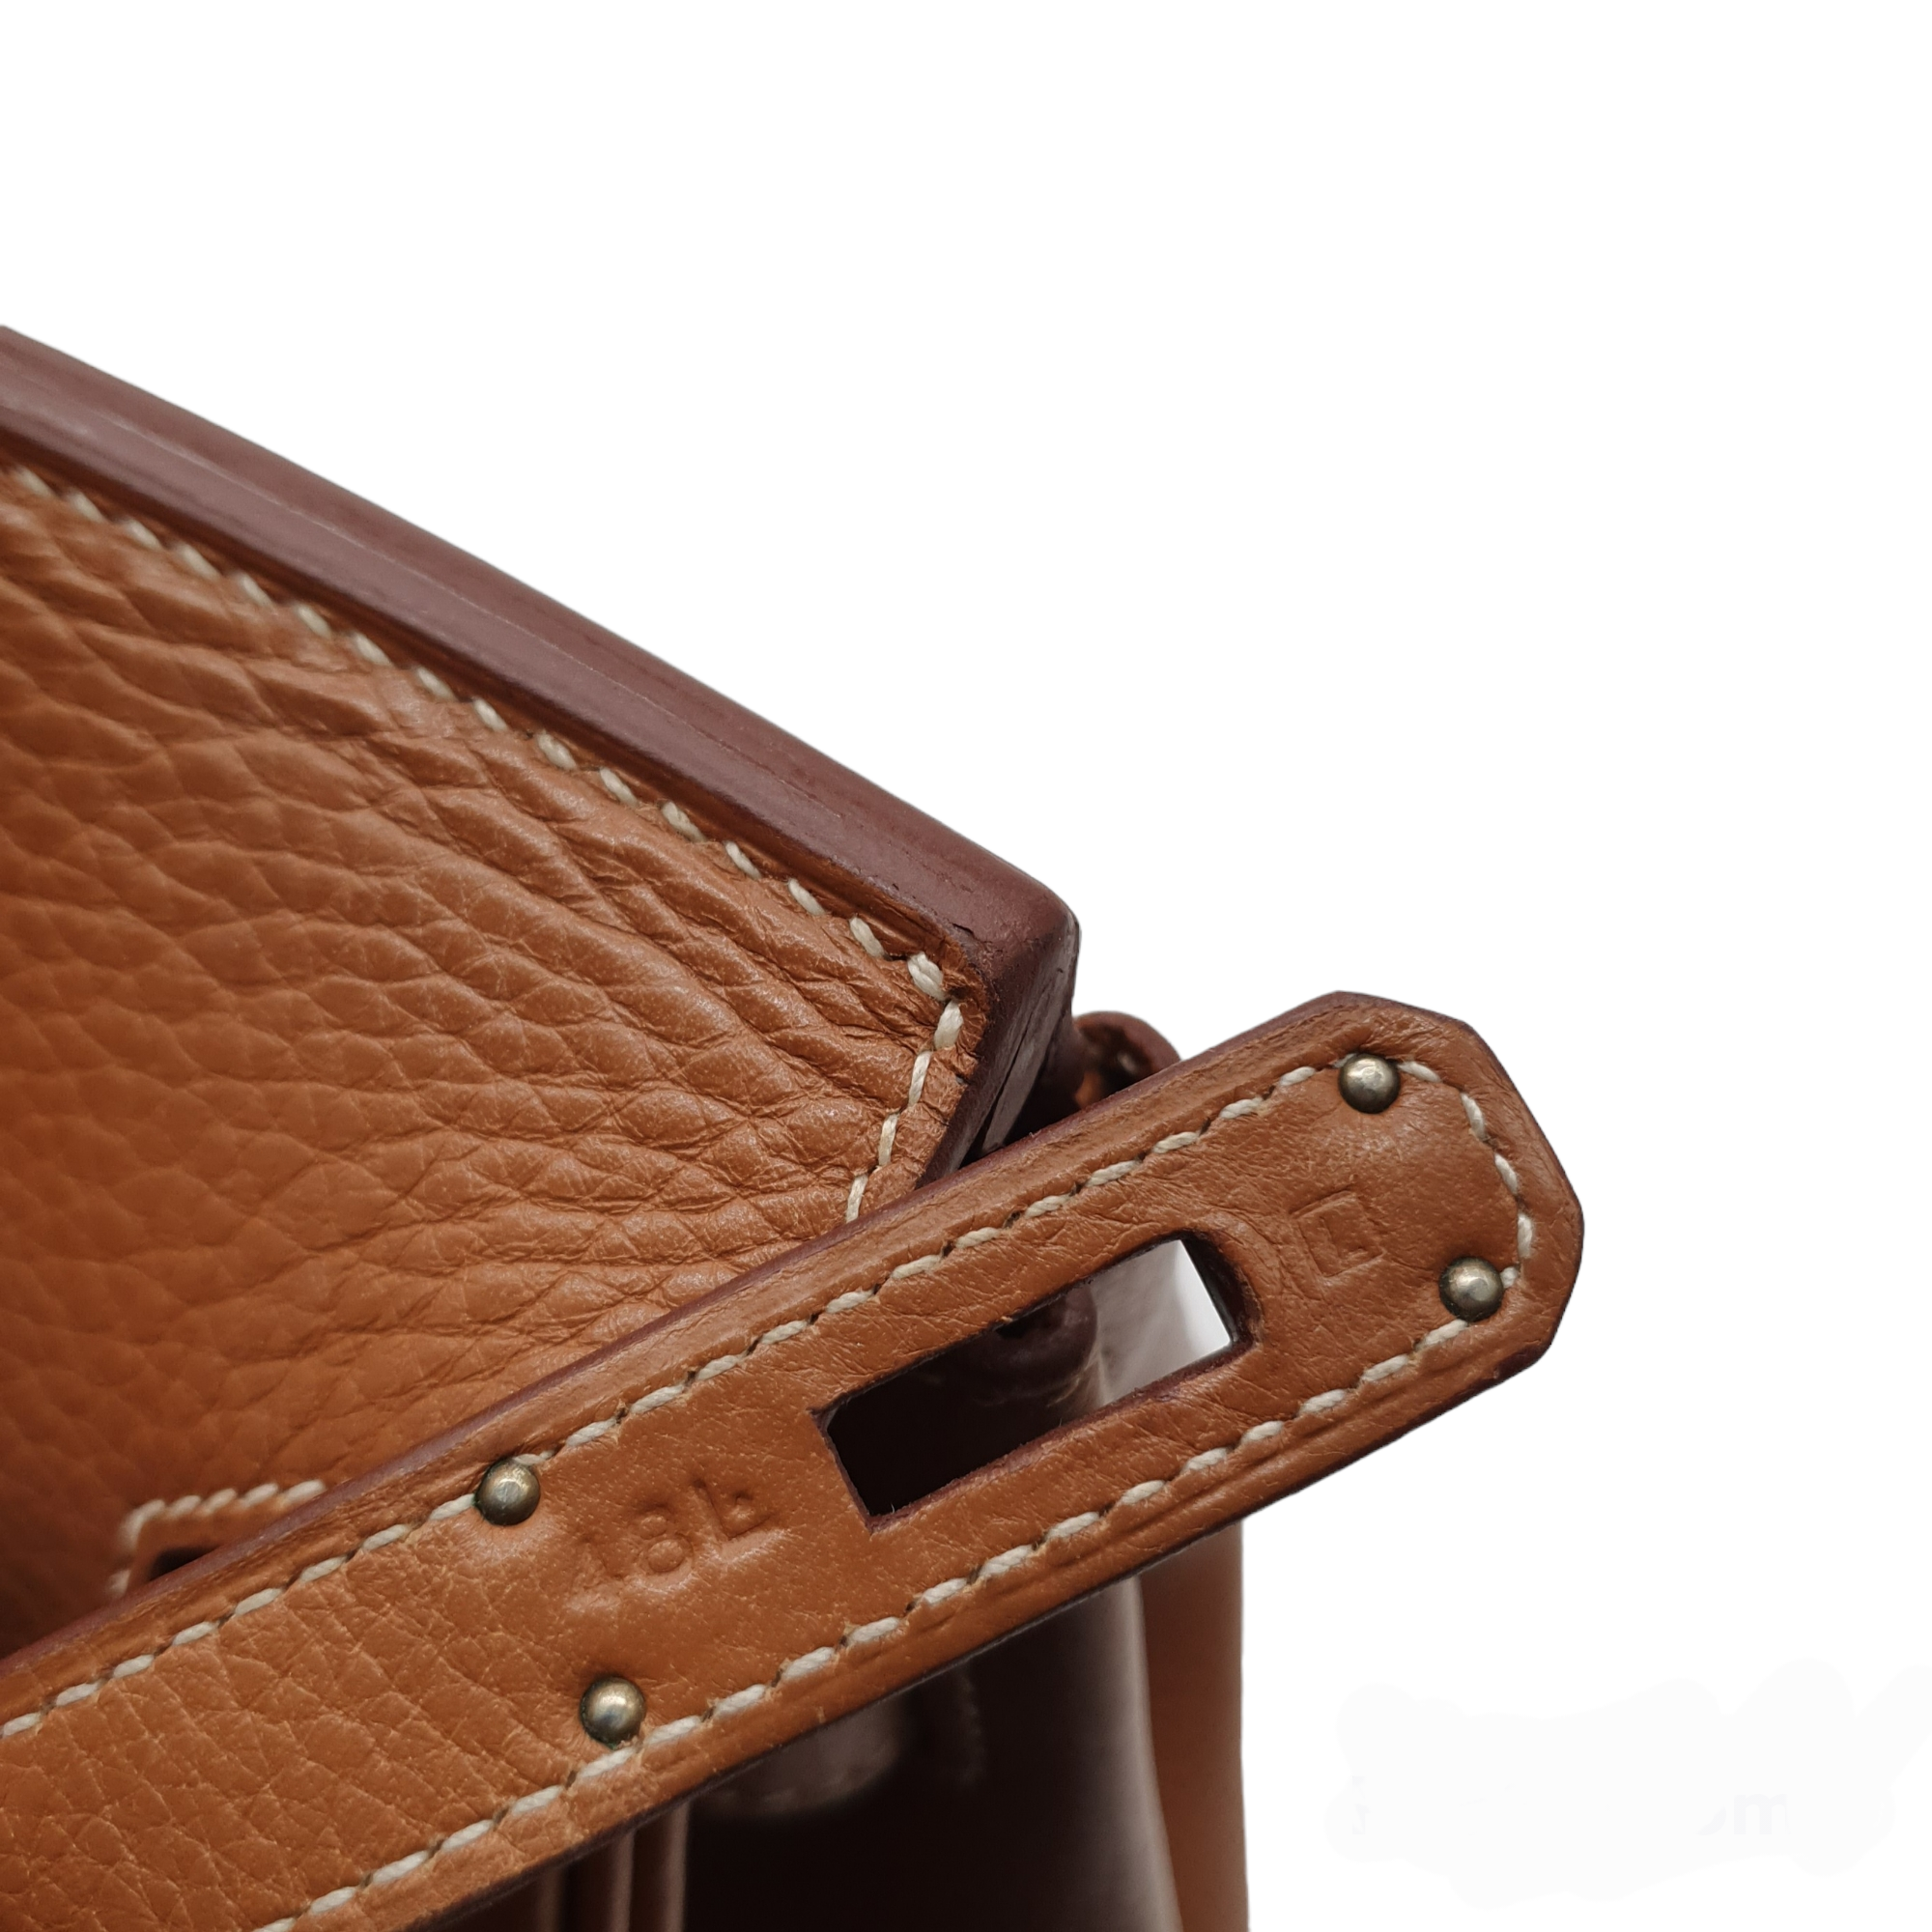 Hermes Birkin 40cm Burgundy Brown Clemence Leather with Palladium